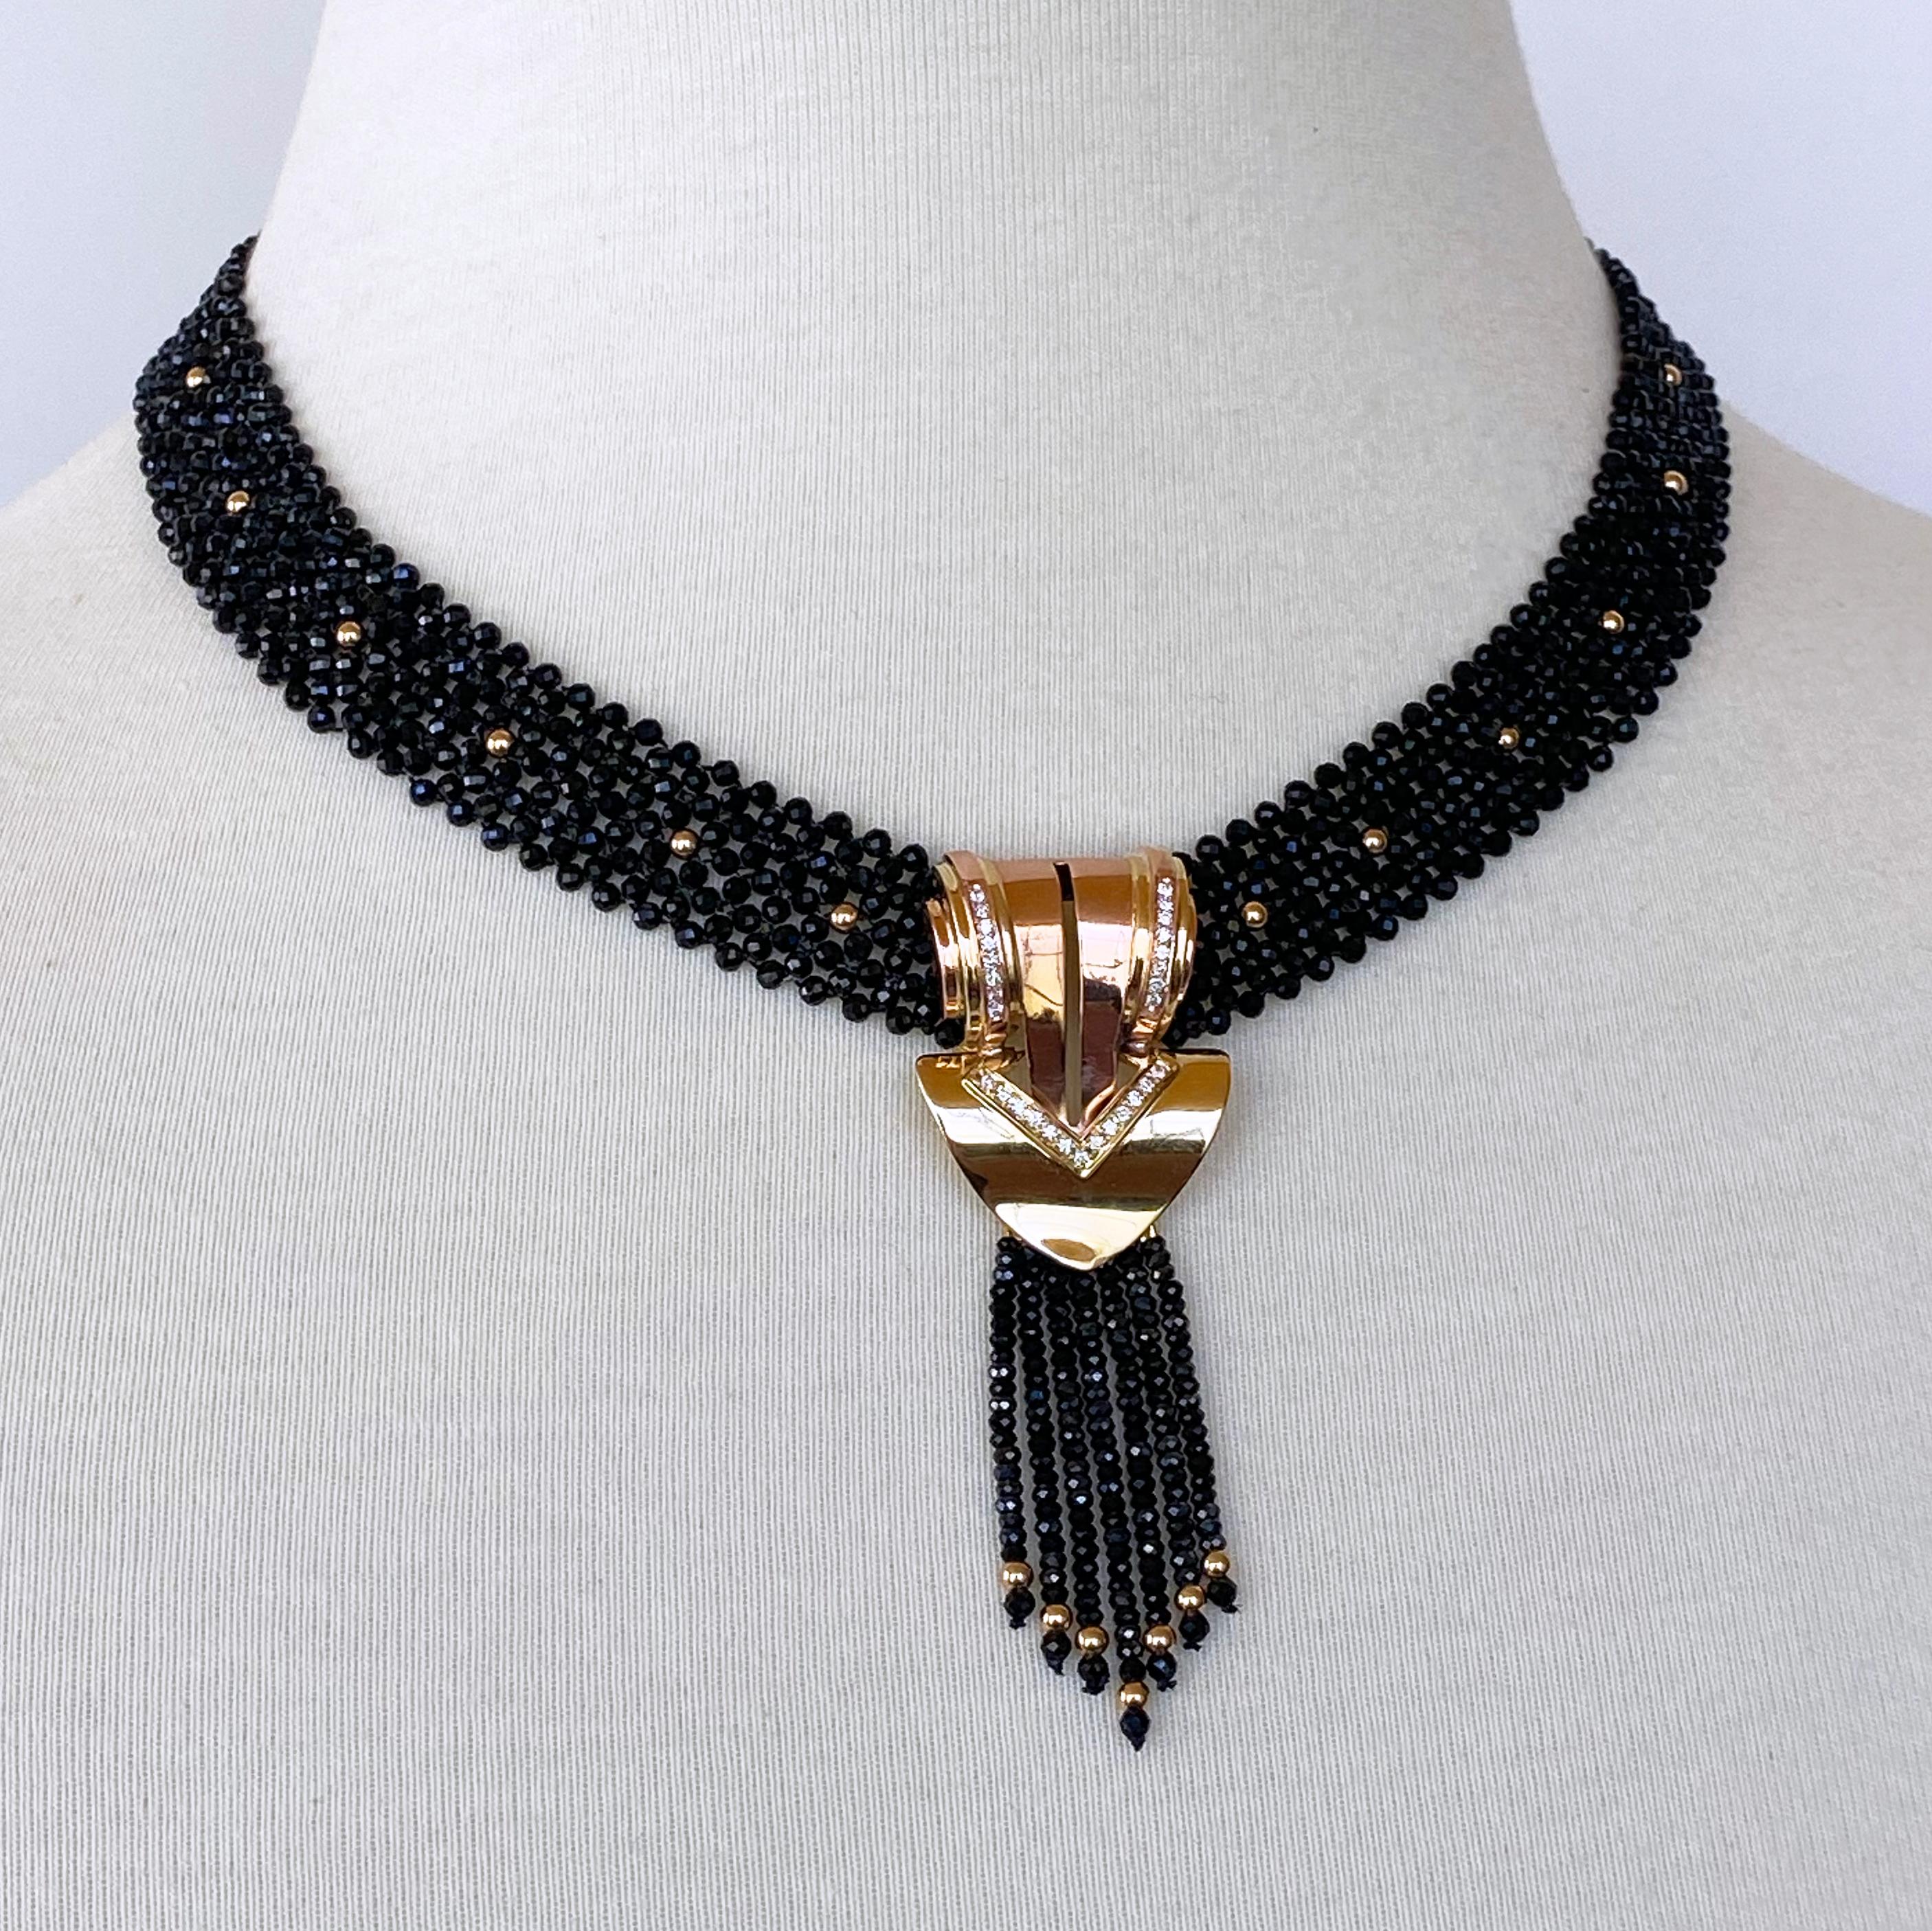 Artisan Marina J. Stunning Diamond, Black Onyx & Solid 14k Yellow Gold Necklace